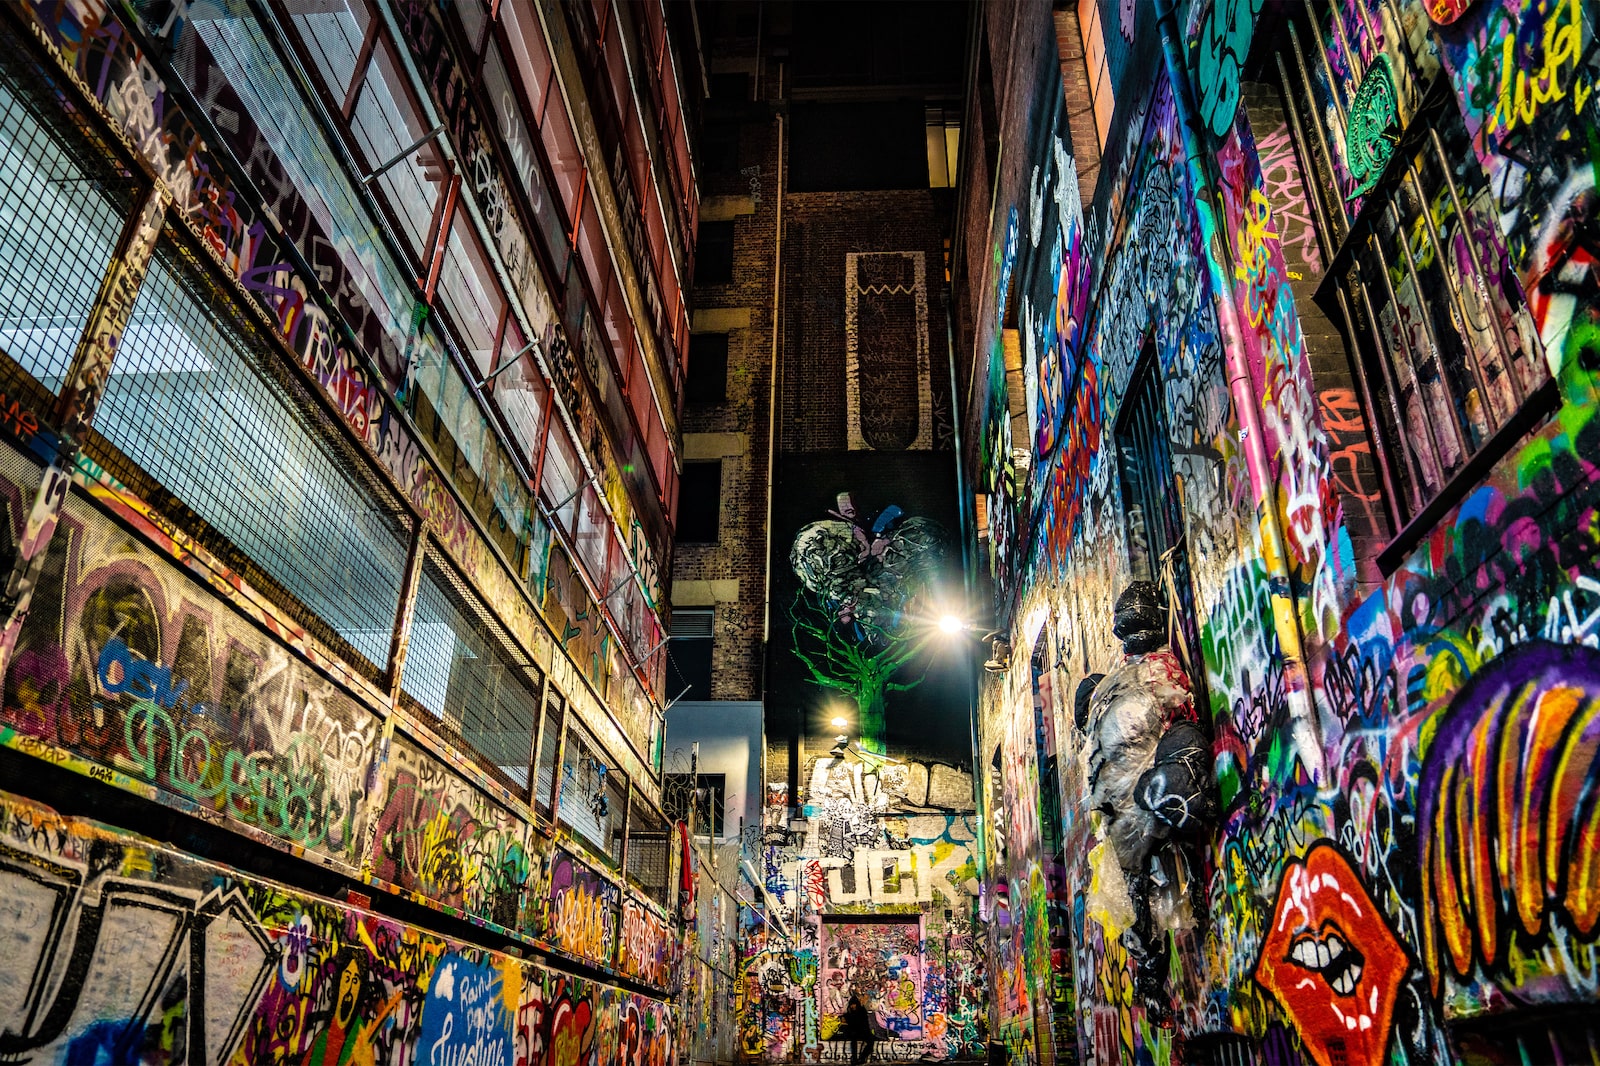 Colourful graffiti lanes facing a brick wall in Hosier Lane